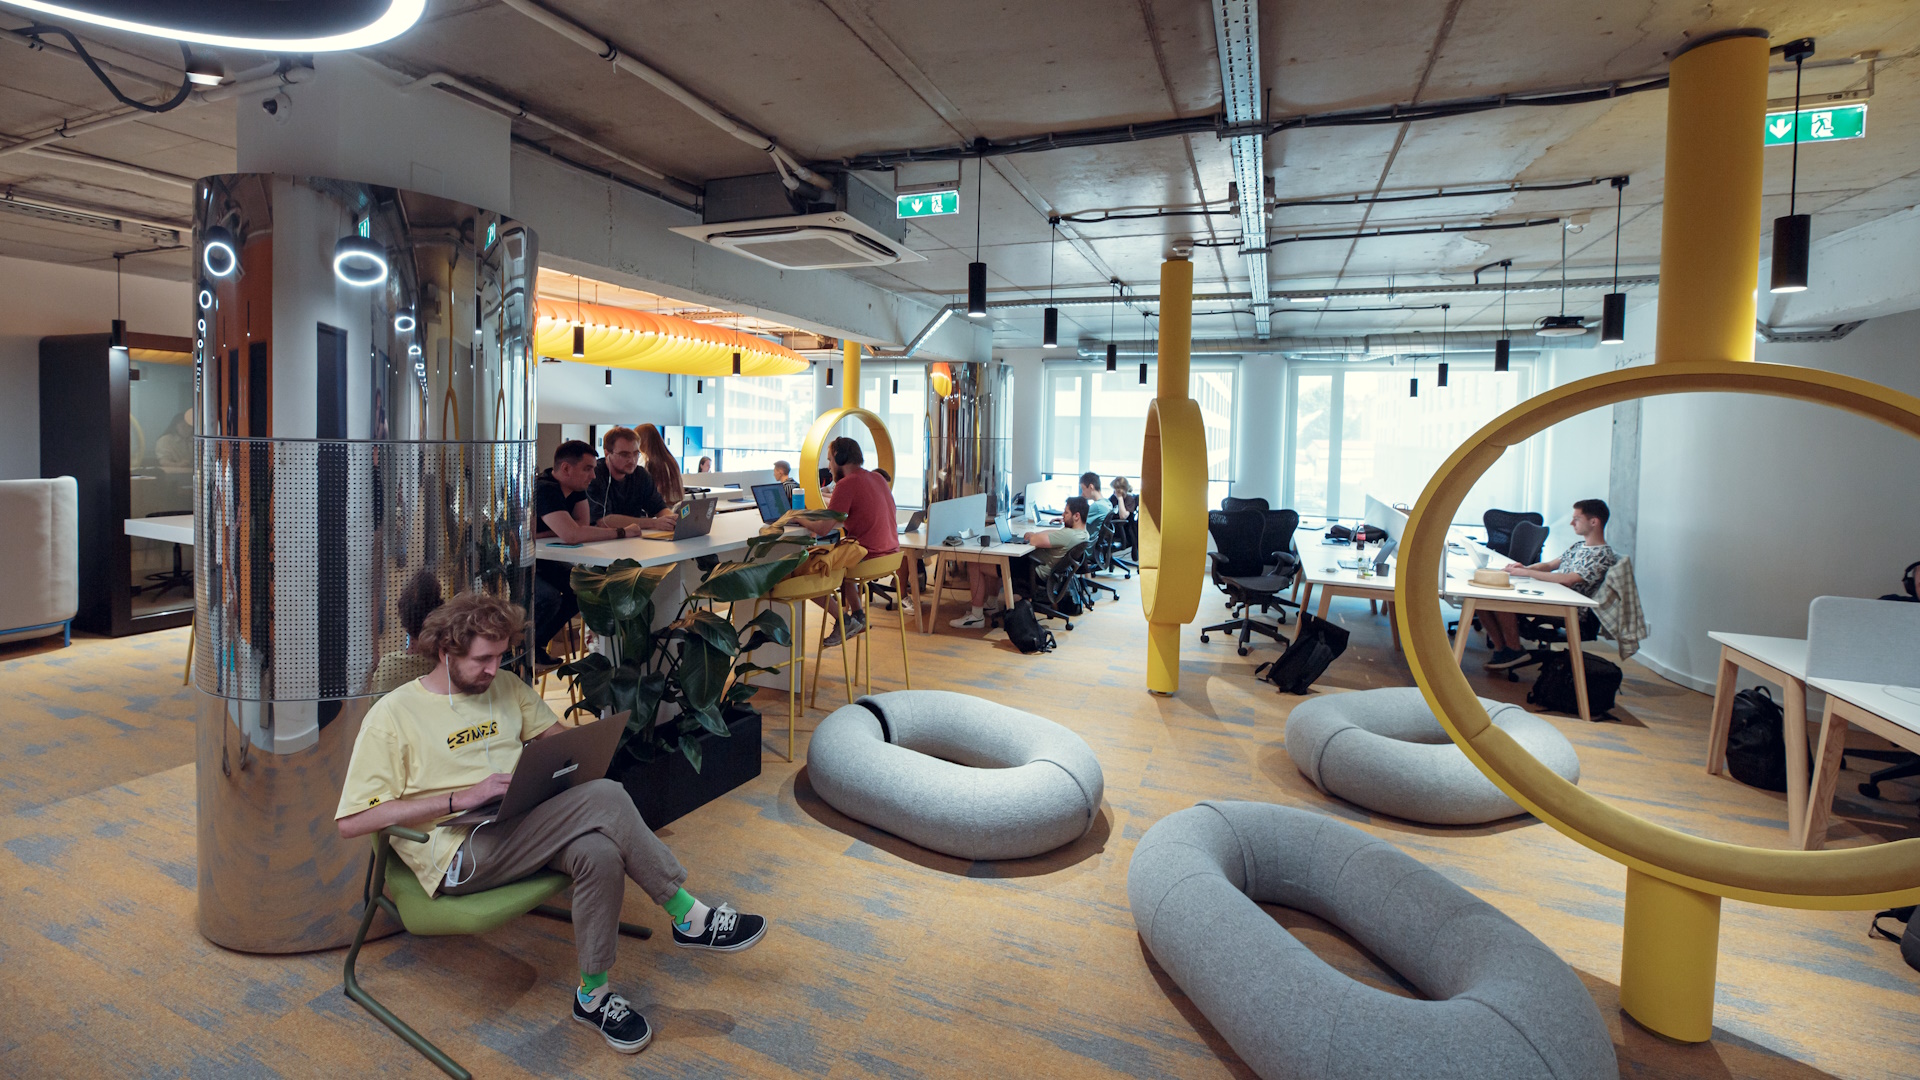 Yandex opened its largest international office in Belgrade